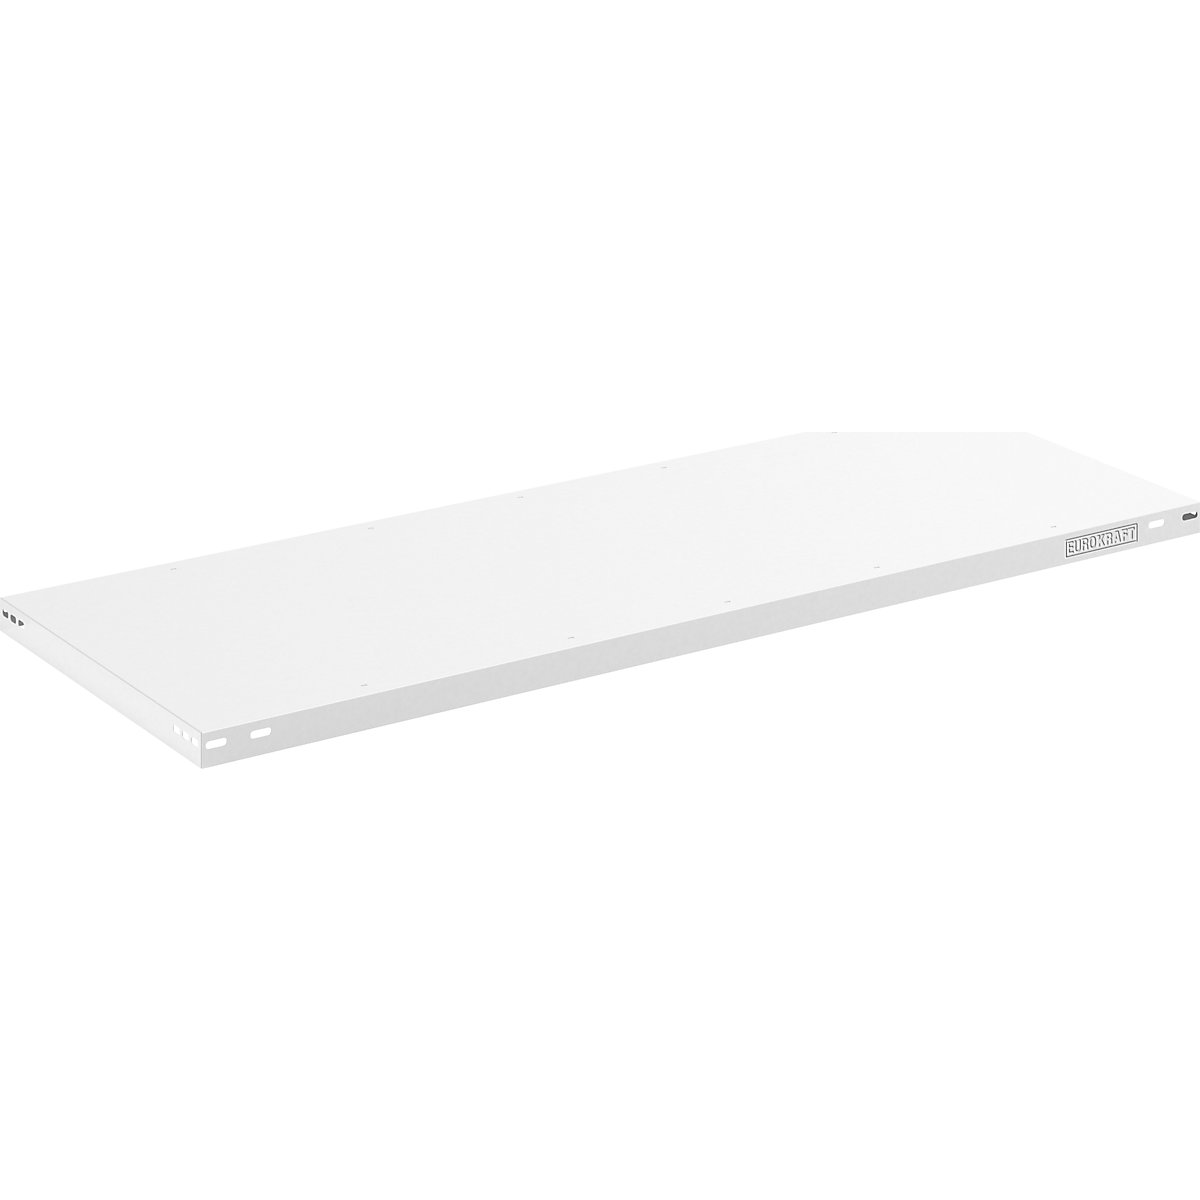 Shelf, max. load 350 kg – eurokraft pro, light grey, WxD 1300 x 600 mm